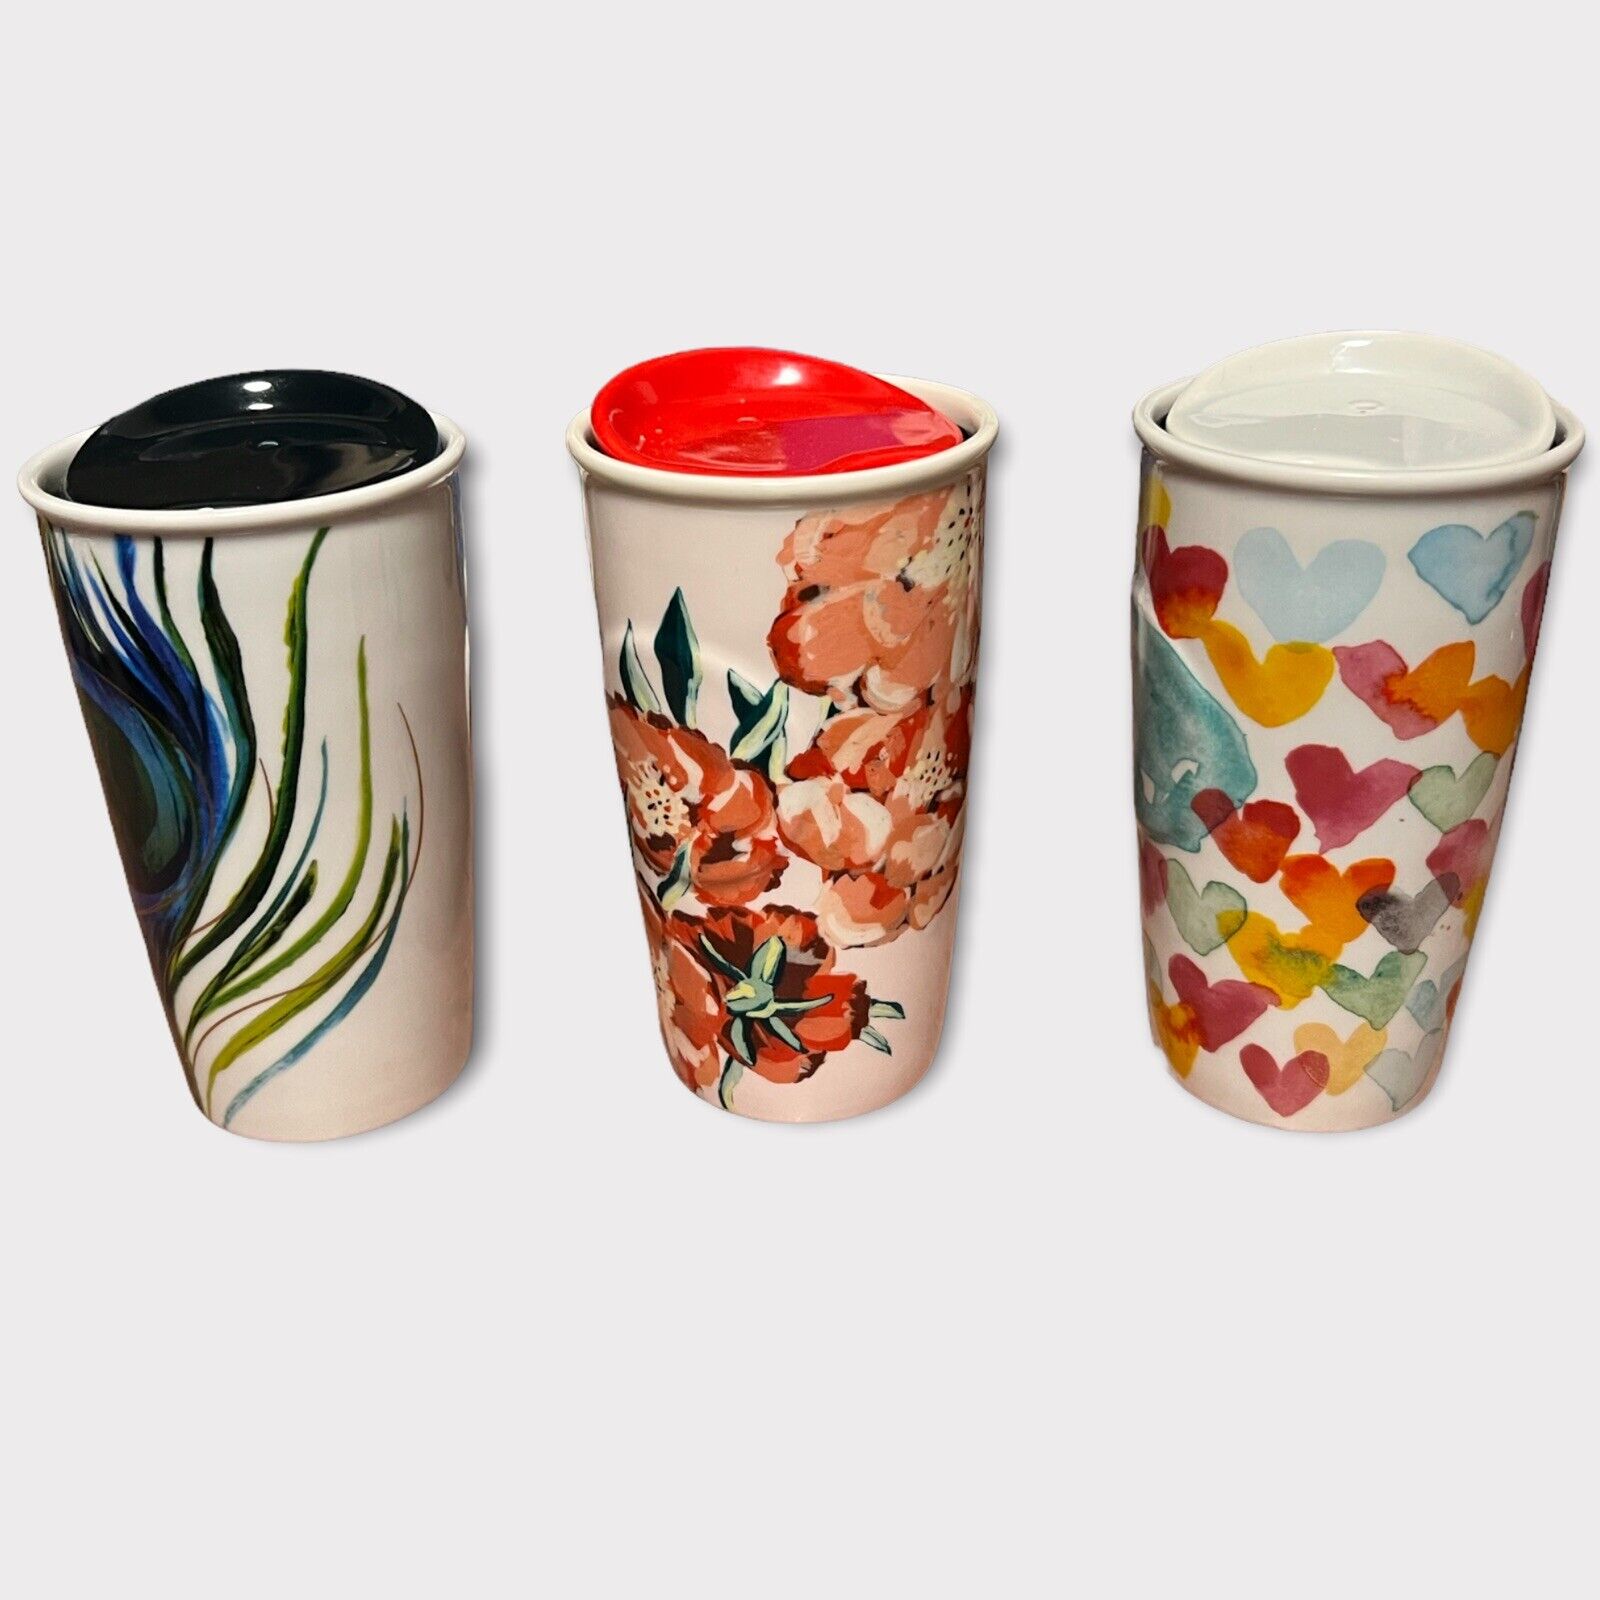 STARBUCKS Ceramic Tumbler Travel Coffee Mug Set Of 3 With Lids Rare